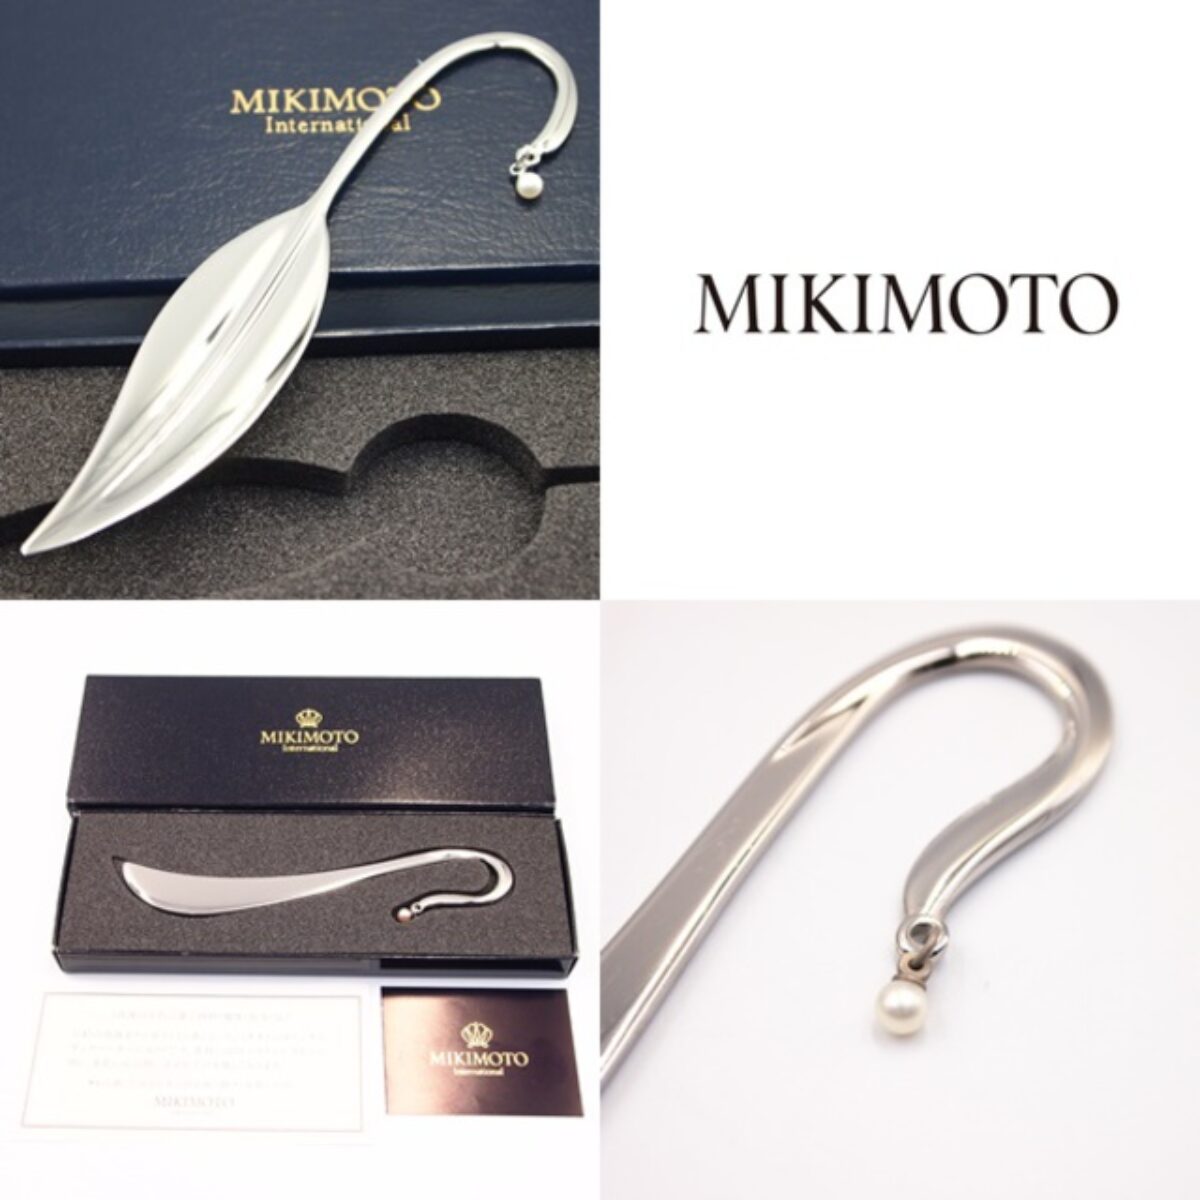 mikimoto-thumb-640xauto-47186